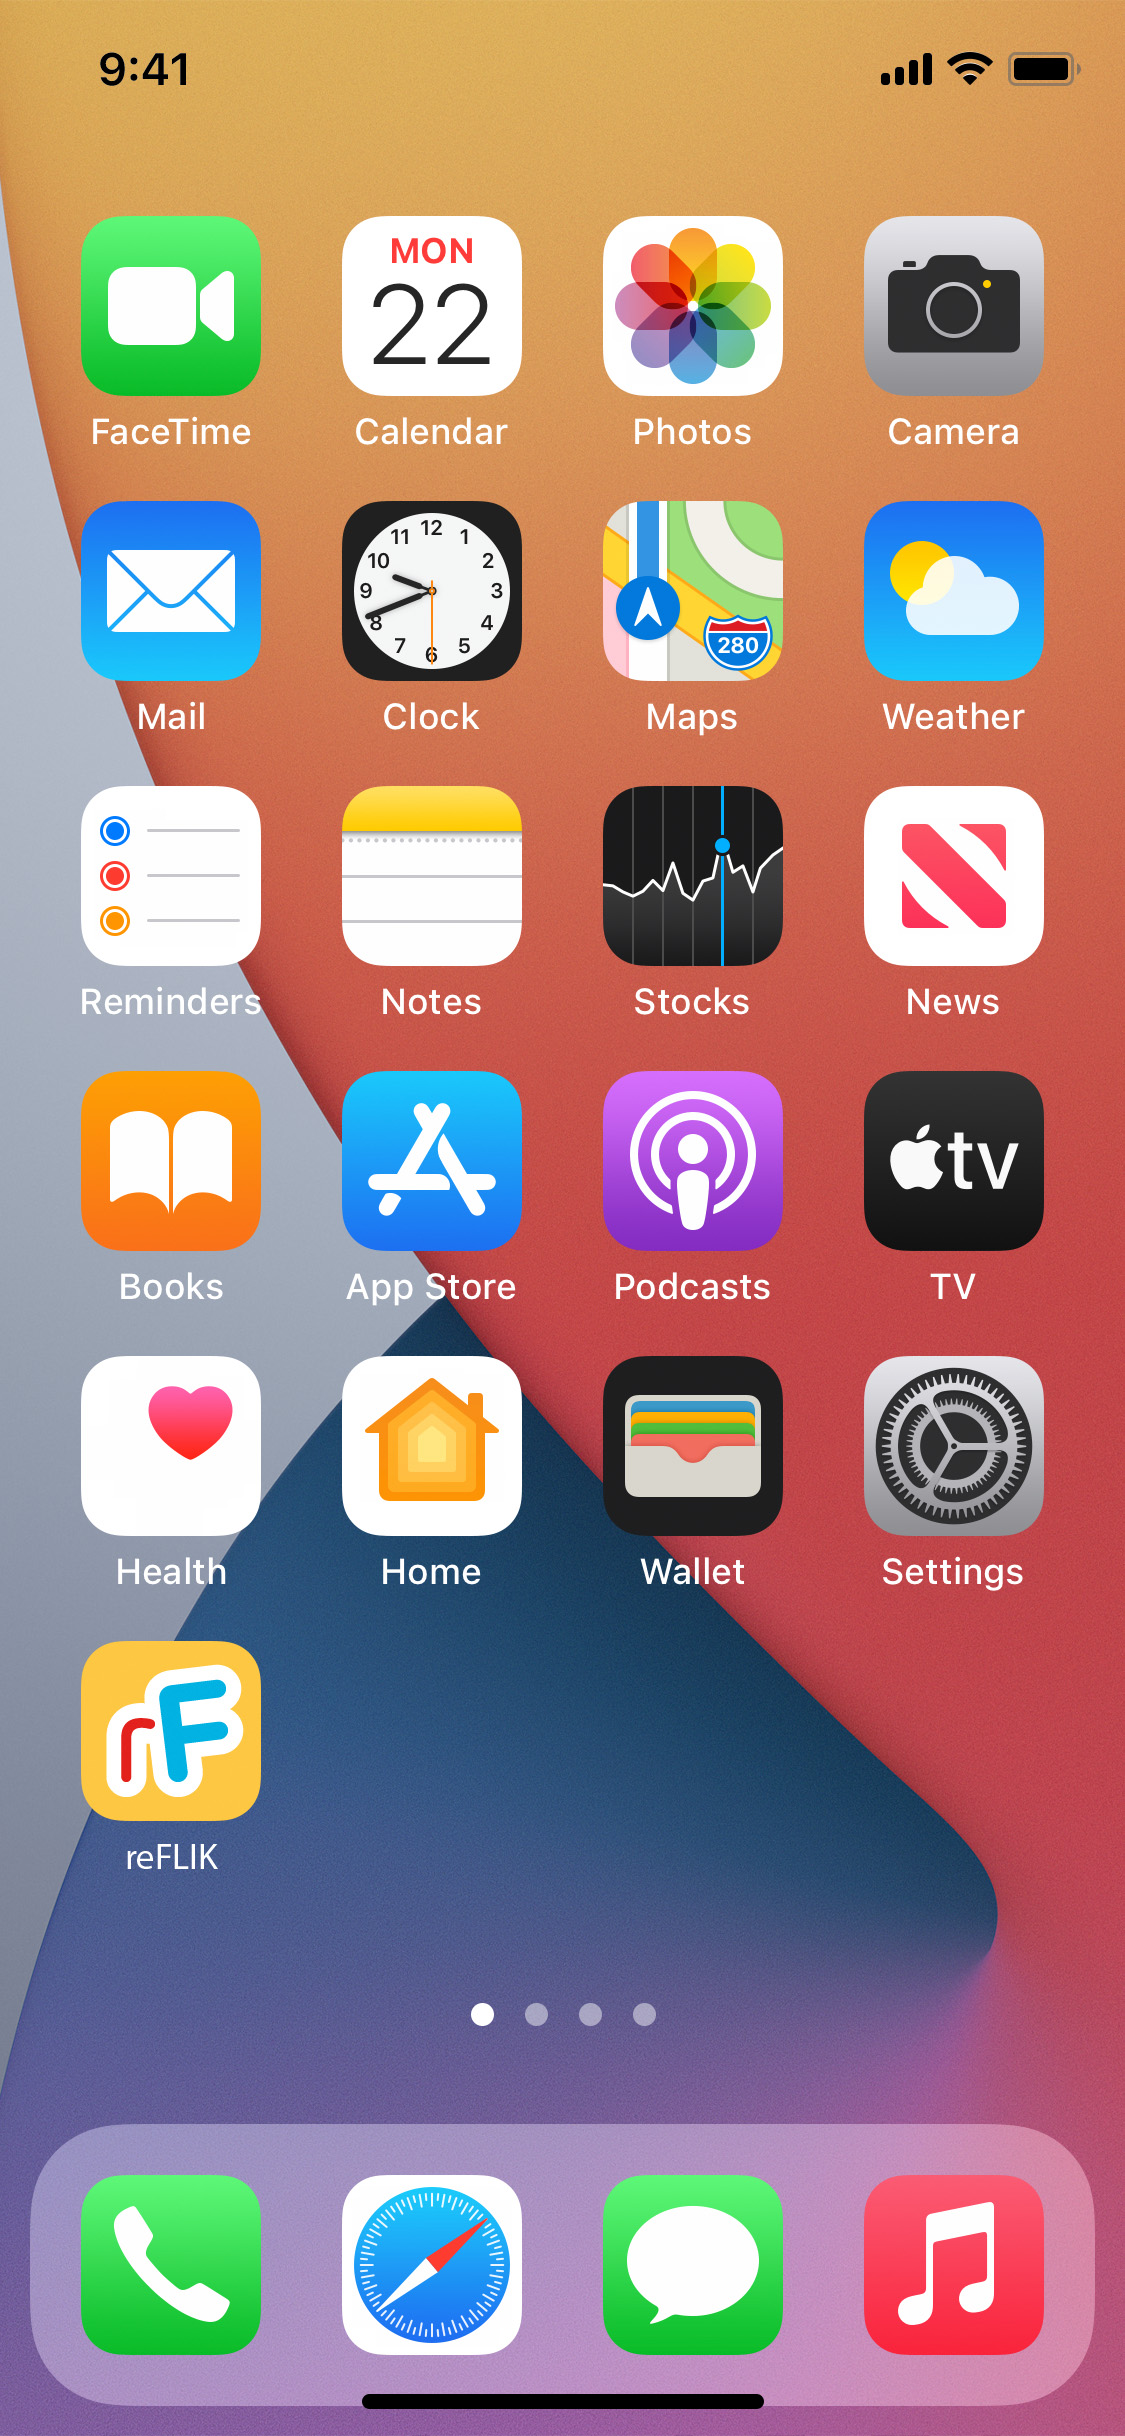 Final iPhone homepage screen including reFLIK app